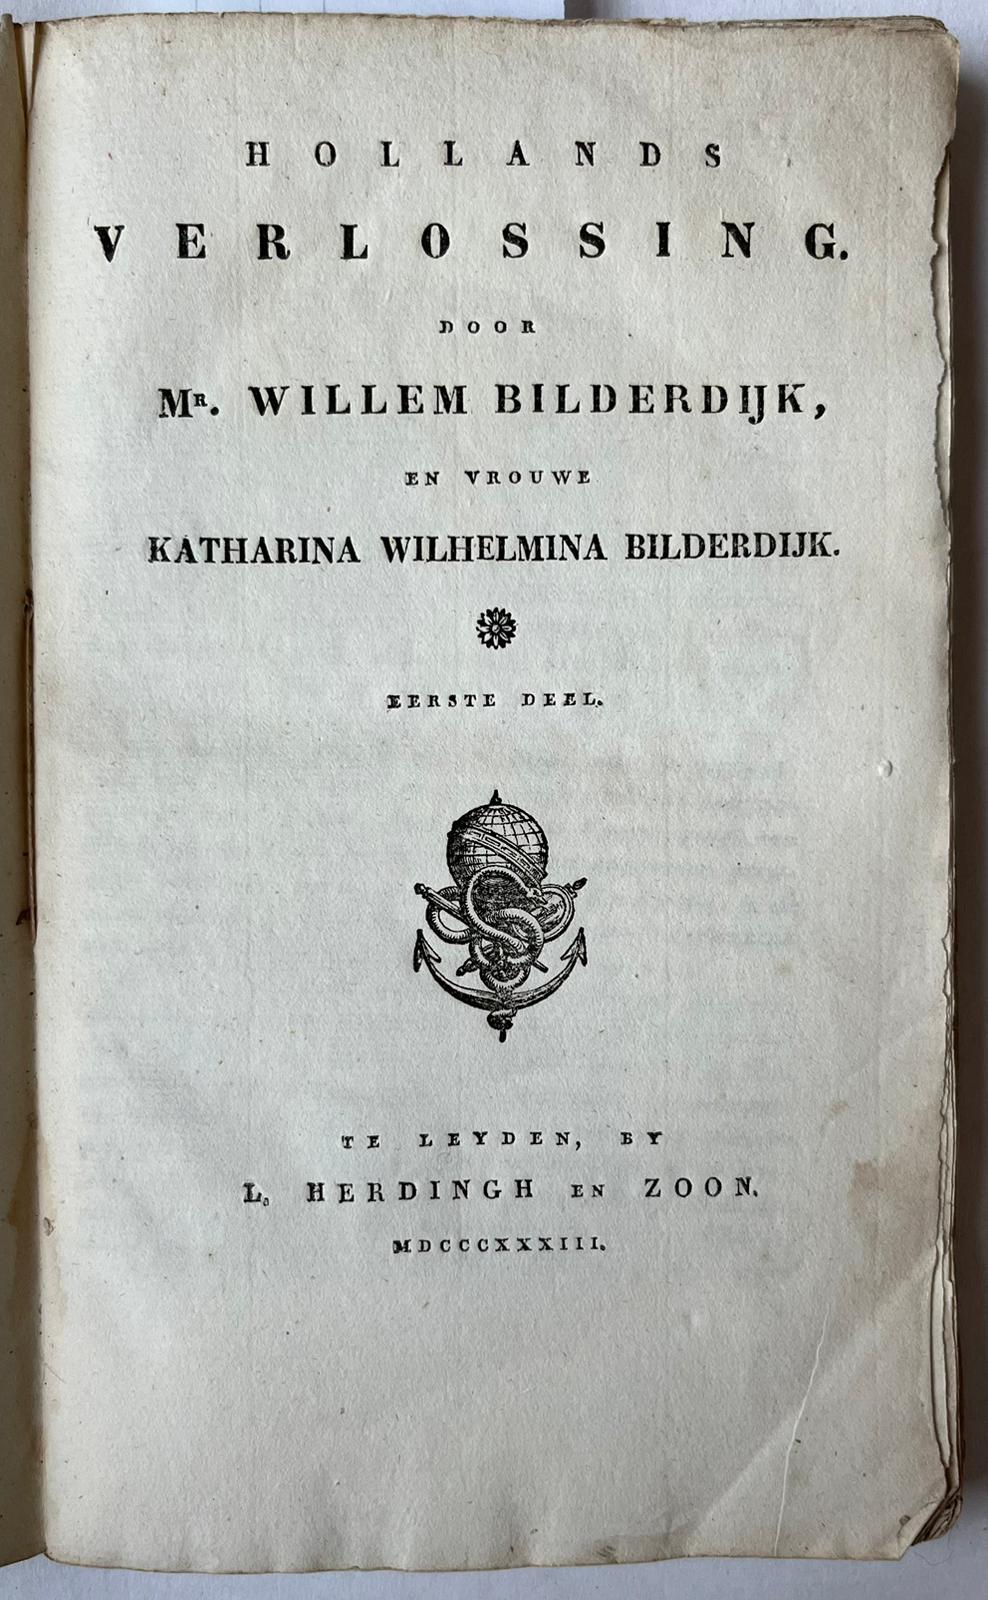 [Literature 1833] Hollands verlossing. Leiden, L. Herdingh en zoon, 1833, [2 parts in 1 volume]